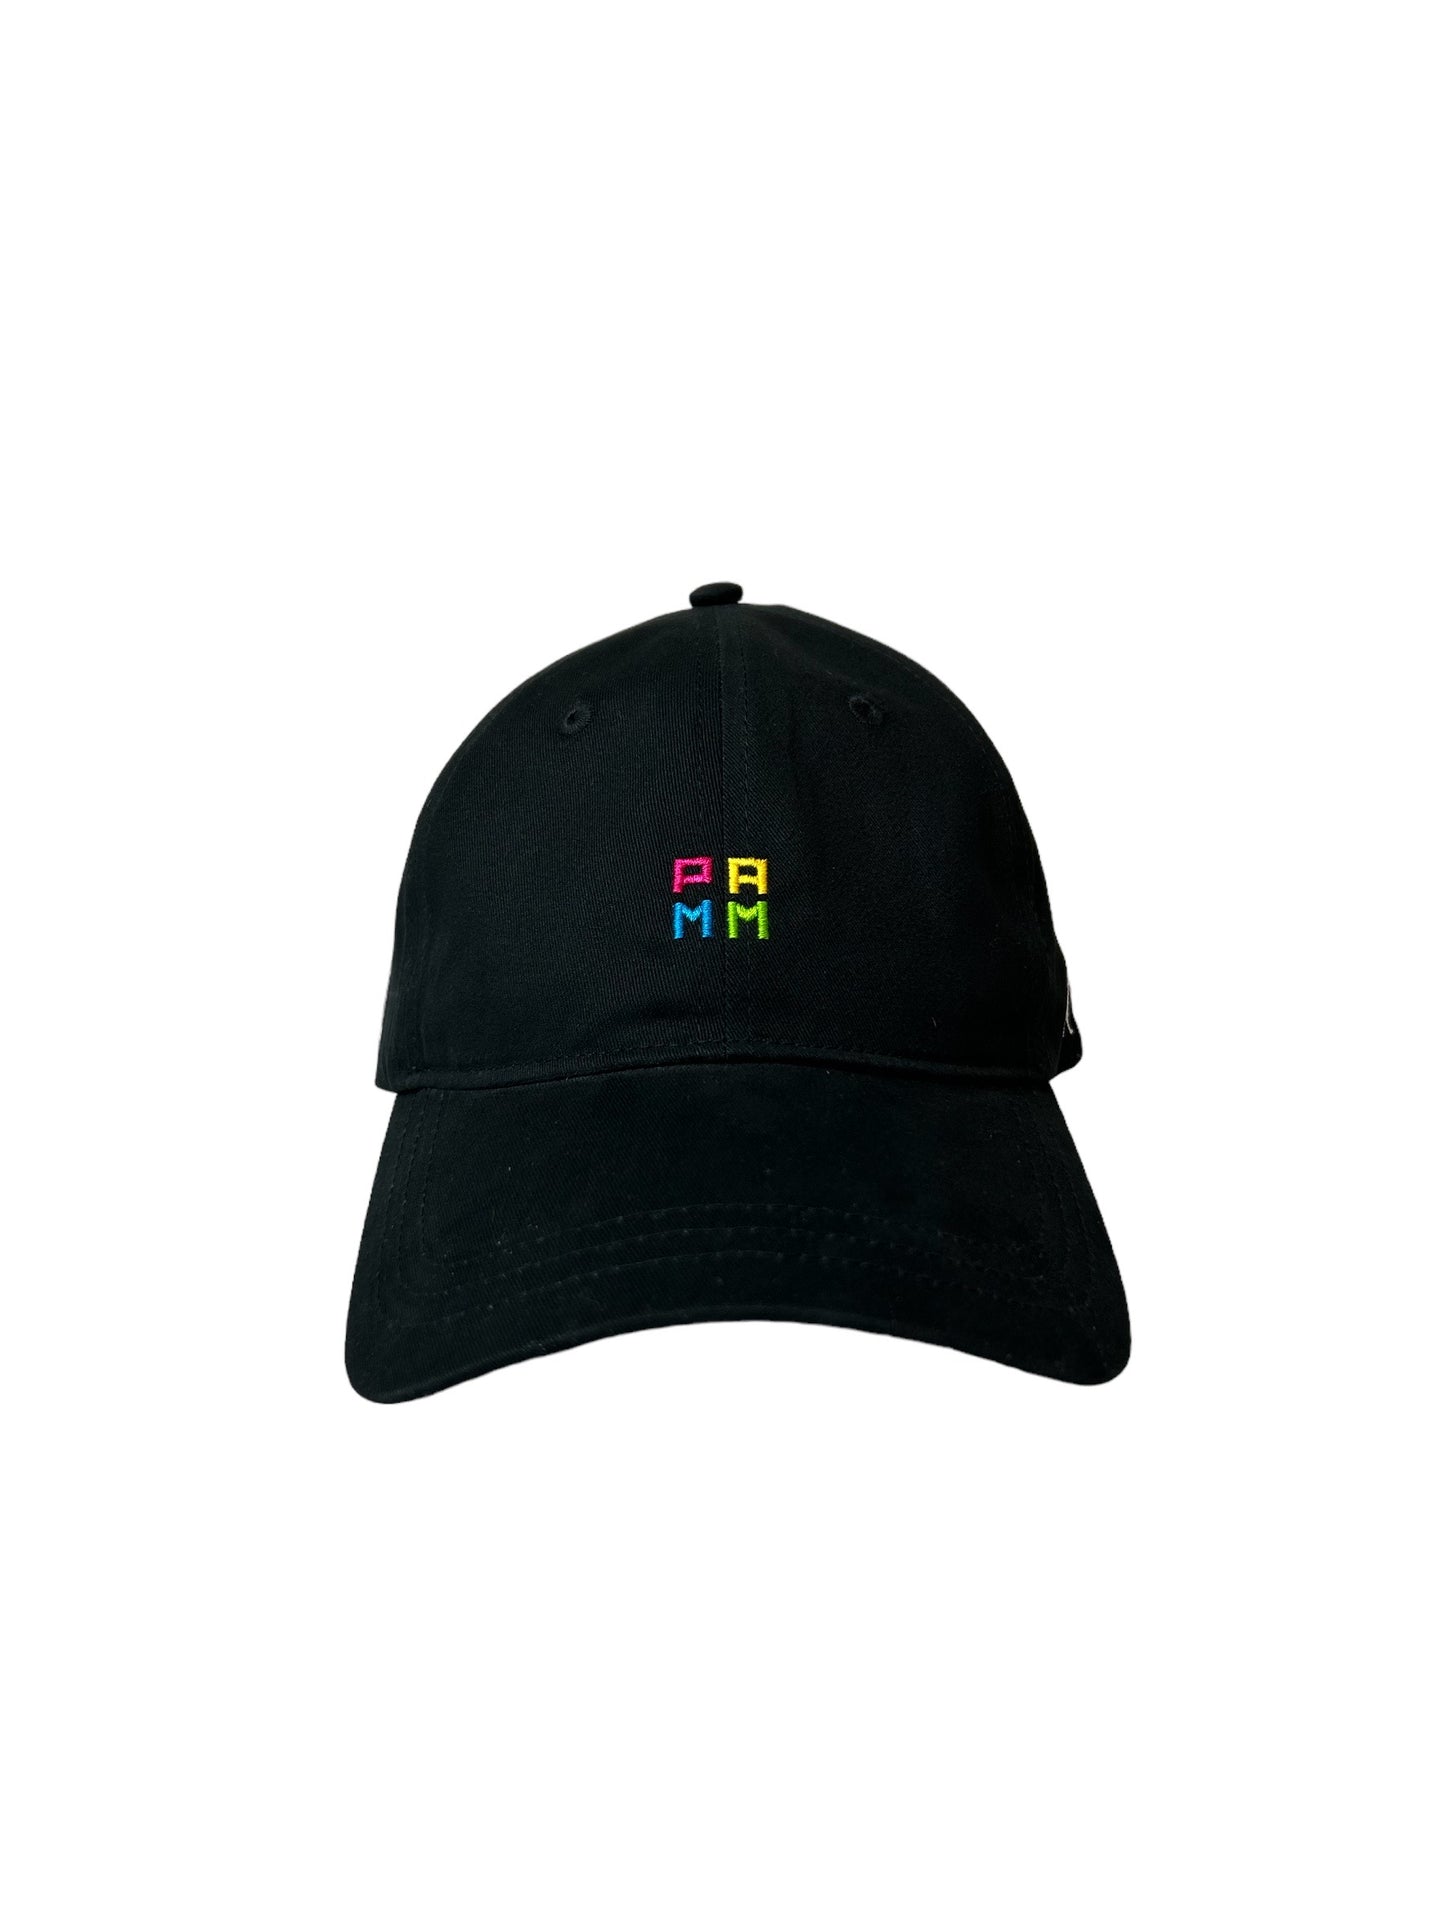 PAMM x TYPOE Hat